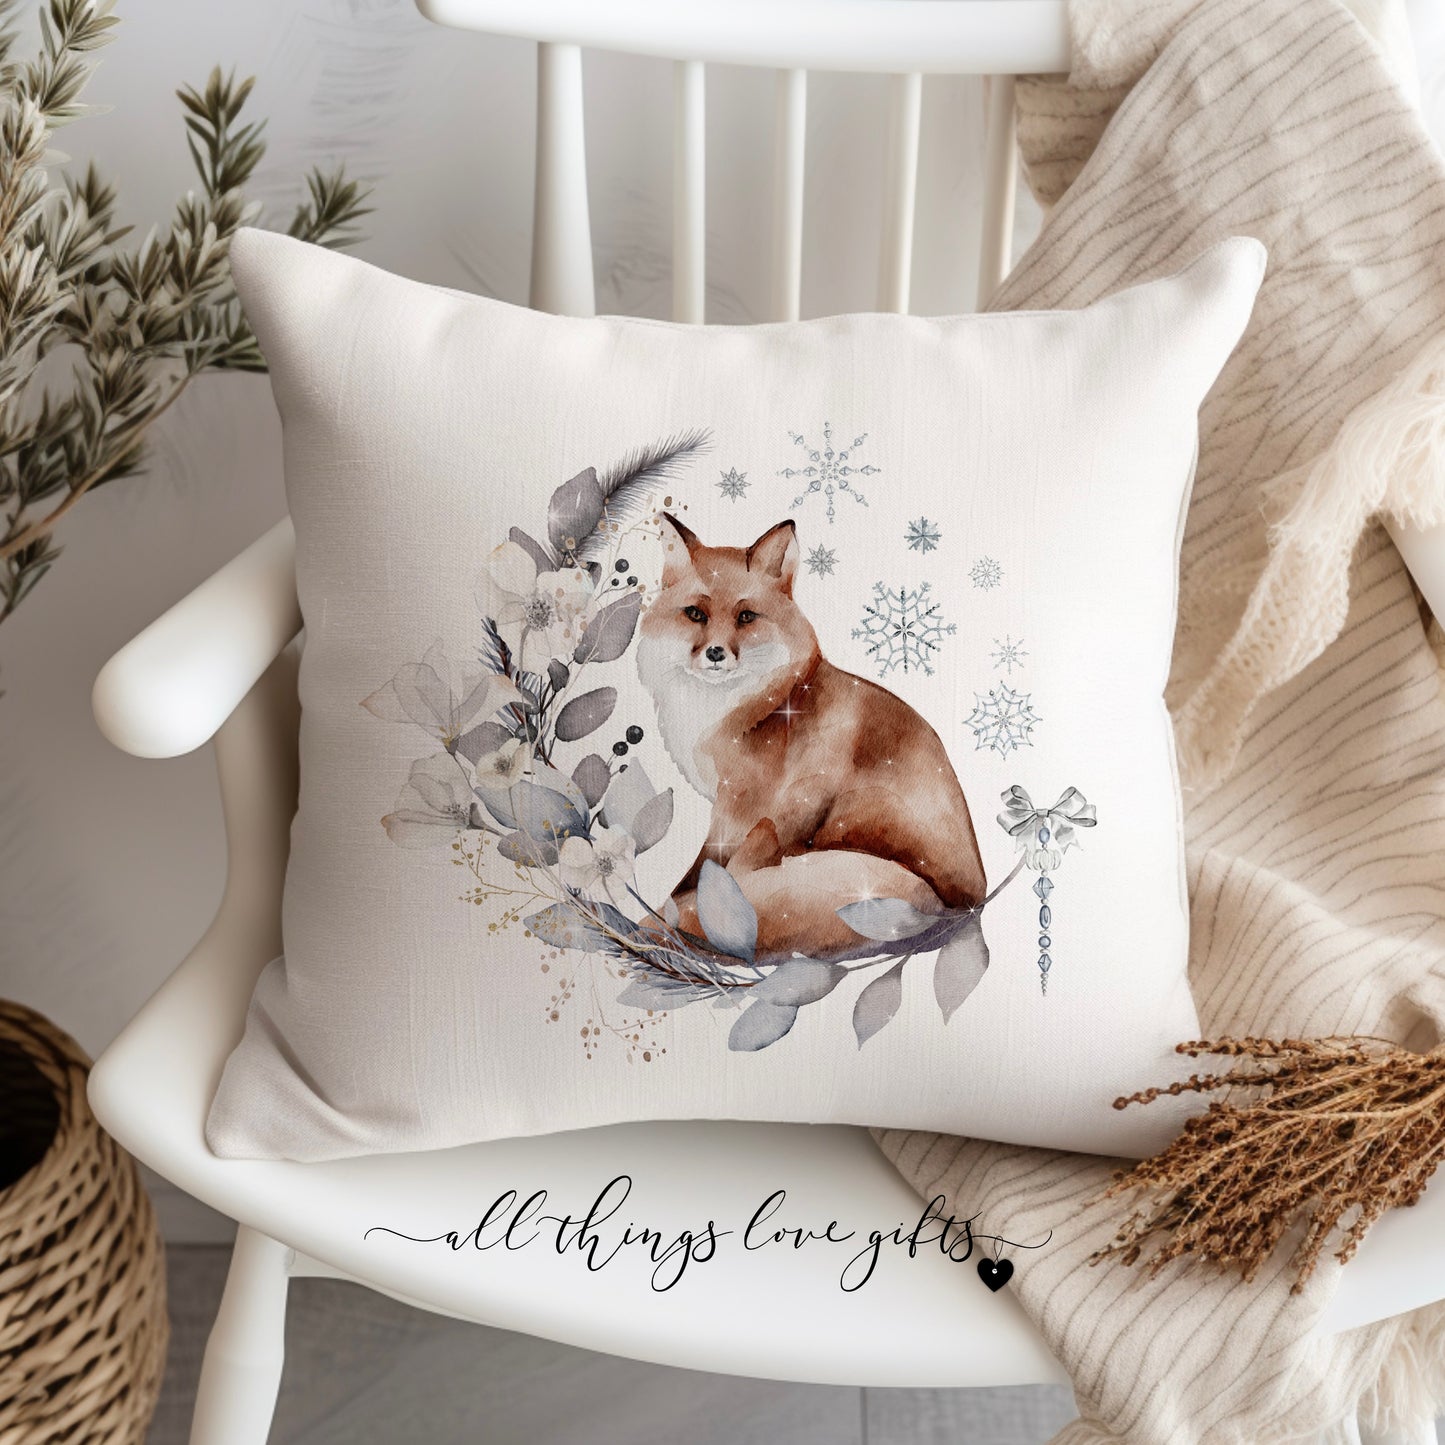 Winter Stag Wreath Cushion